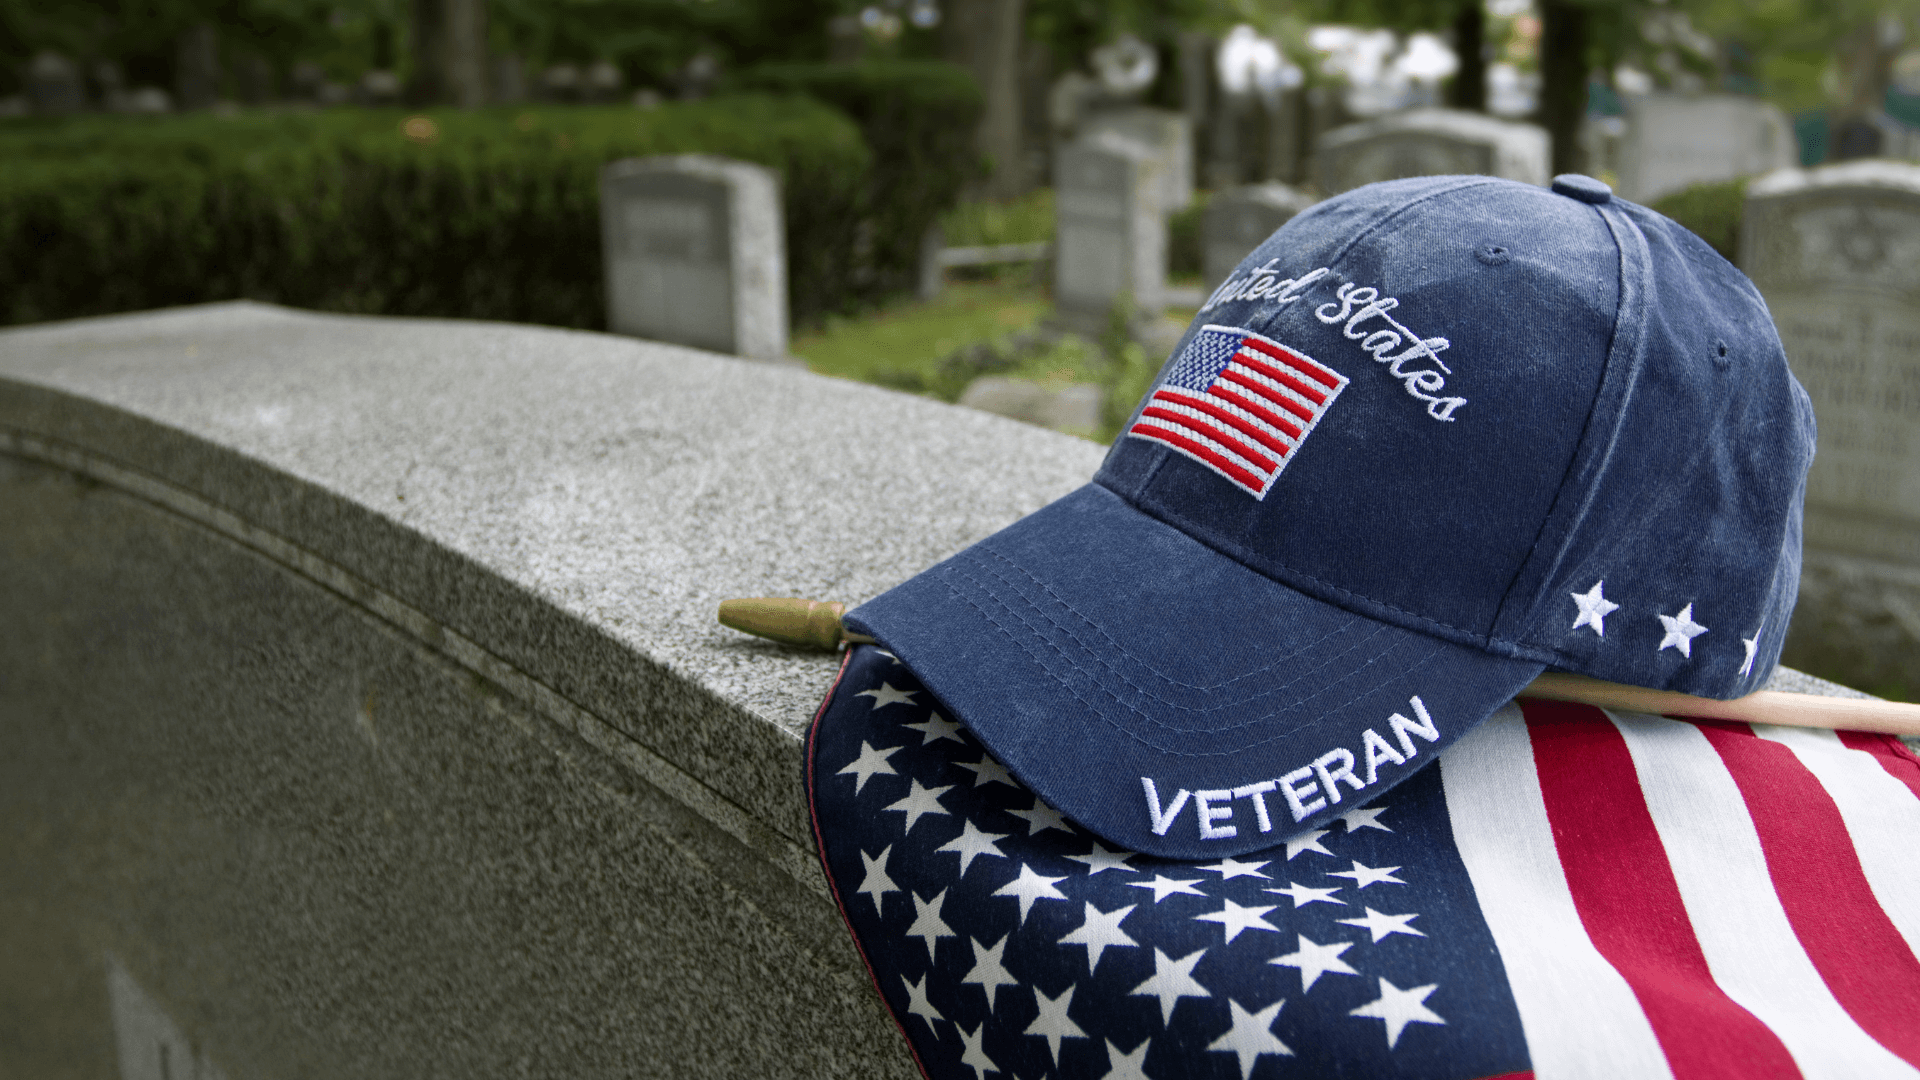 Veteran cap with US Flag